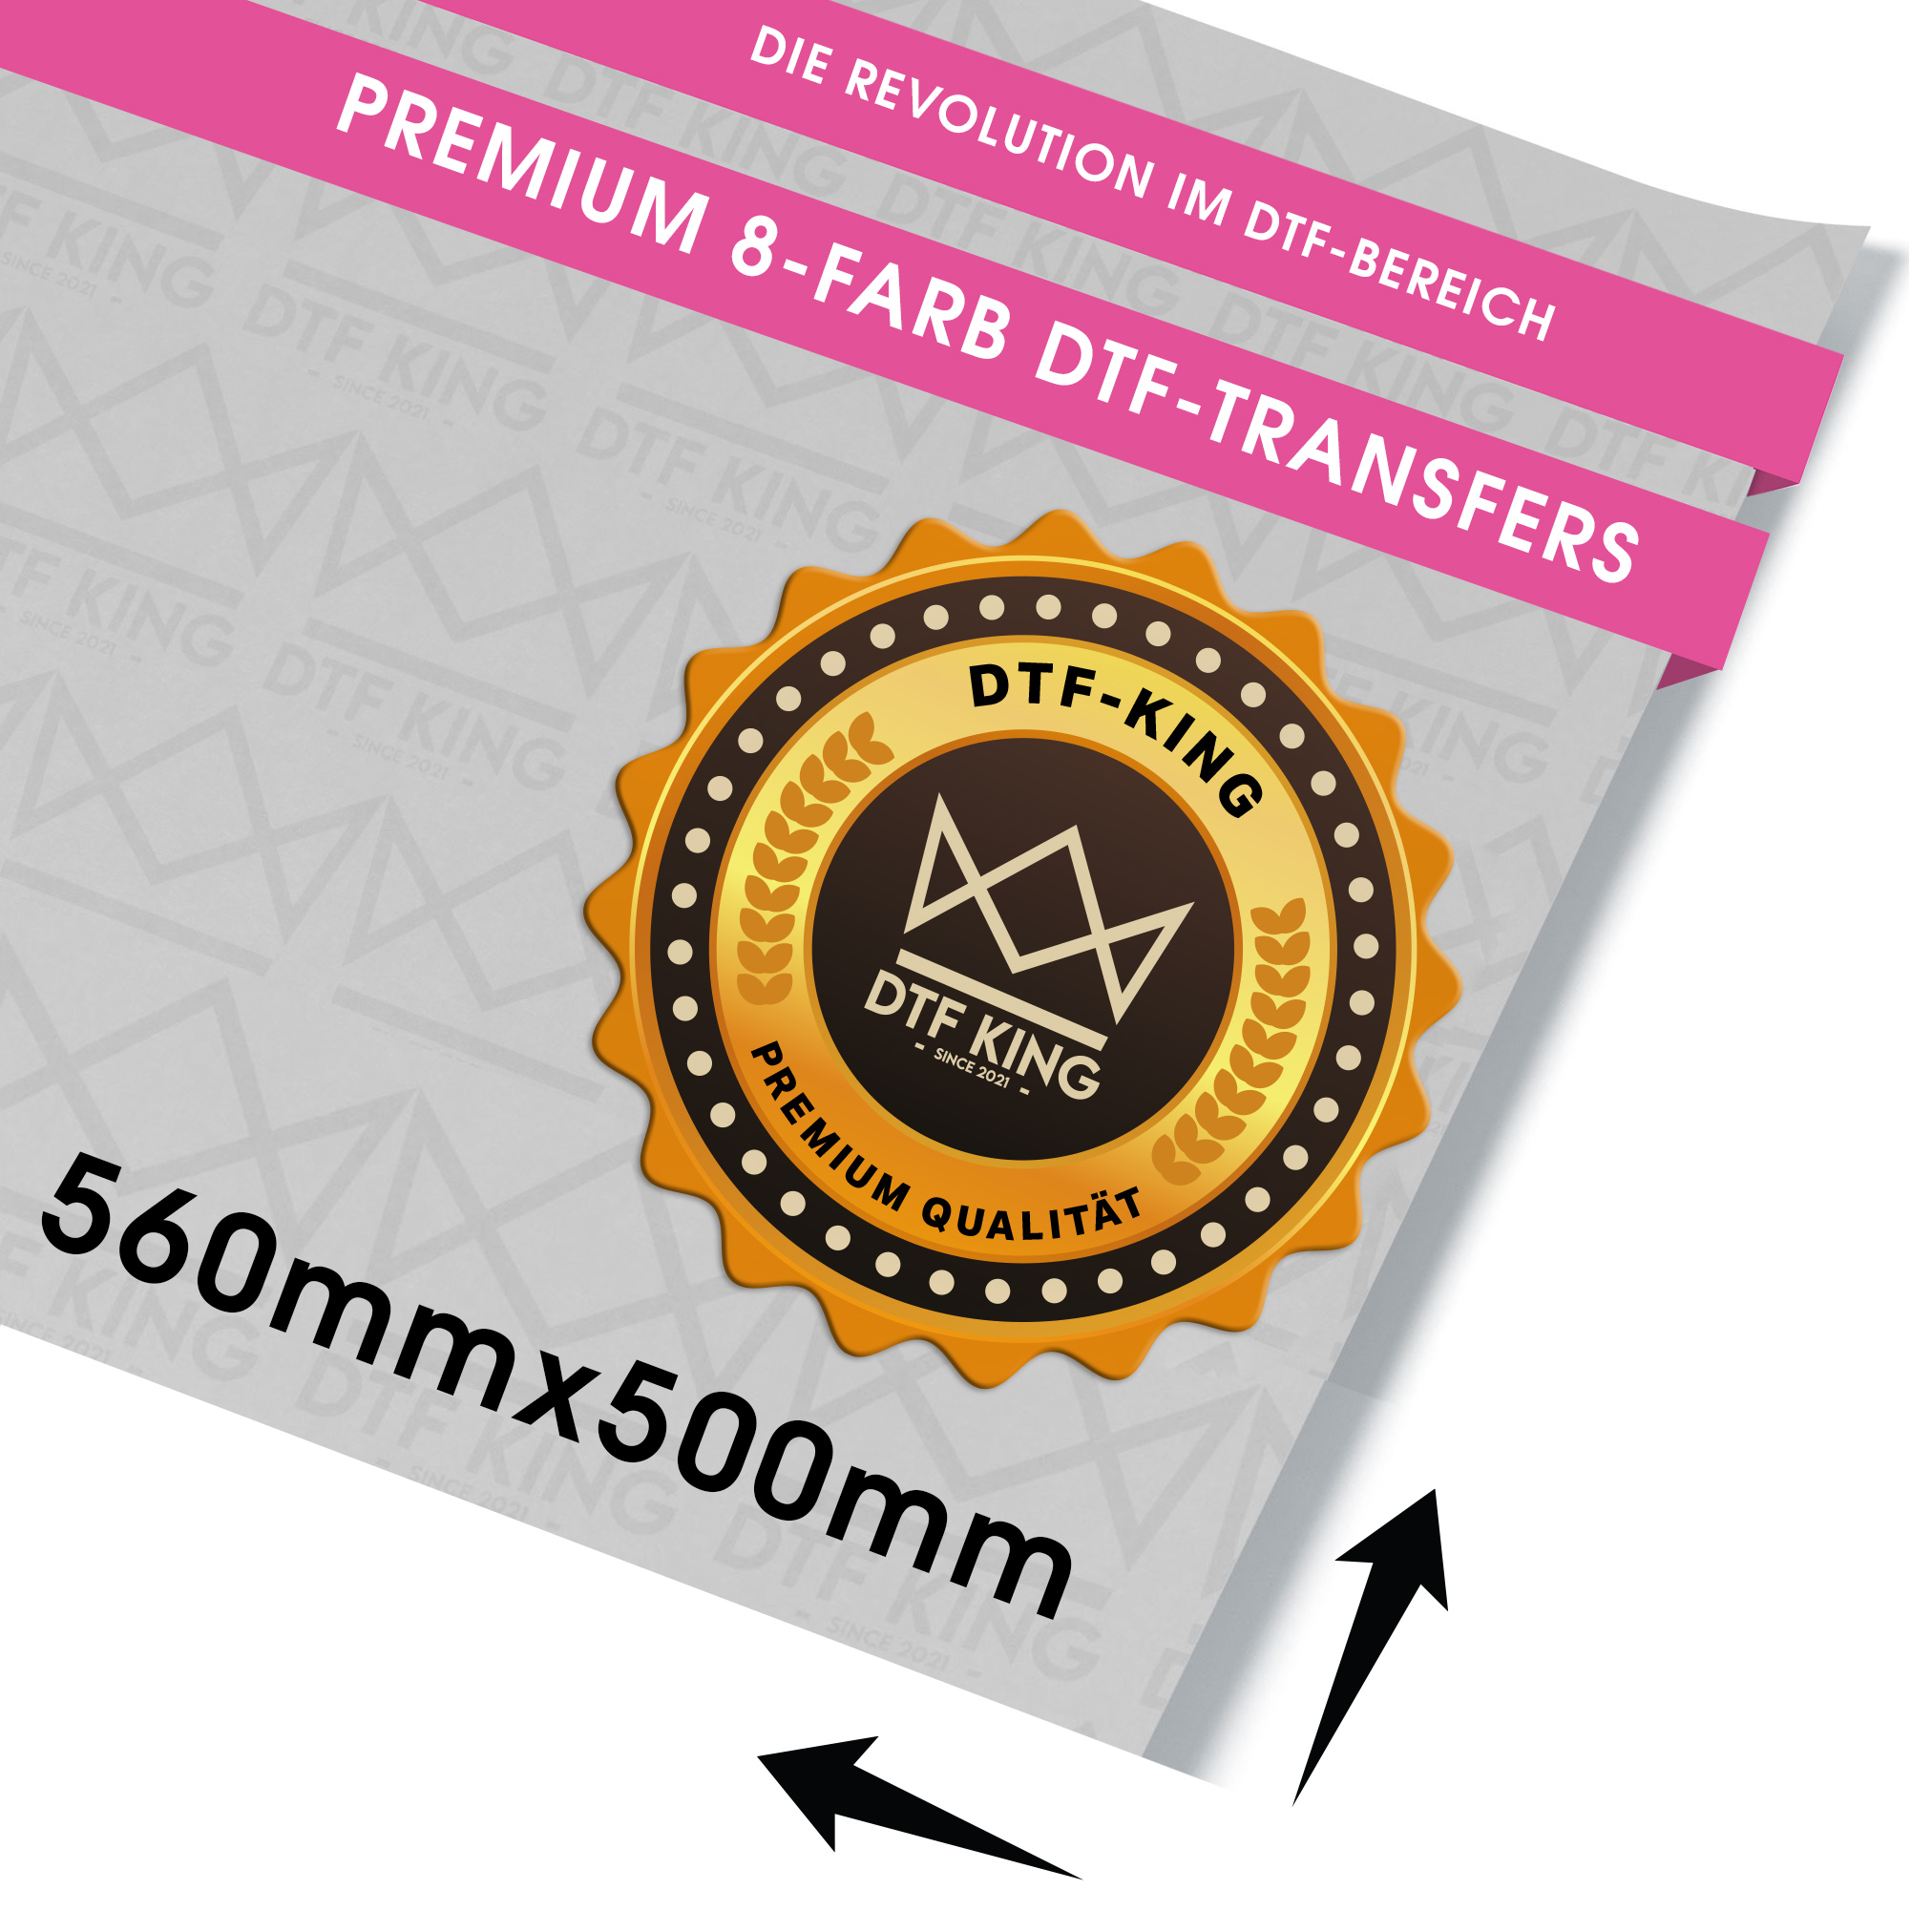 DTF-Transfer Premium - 560 x 500 mm